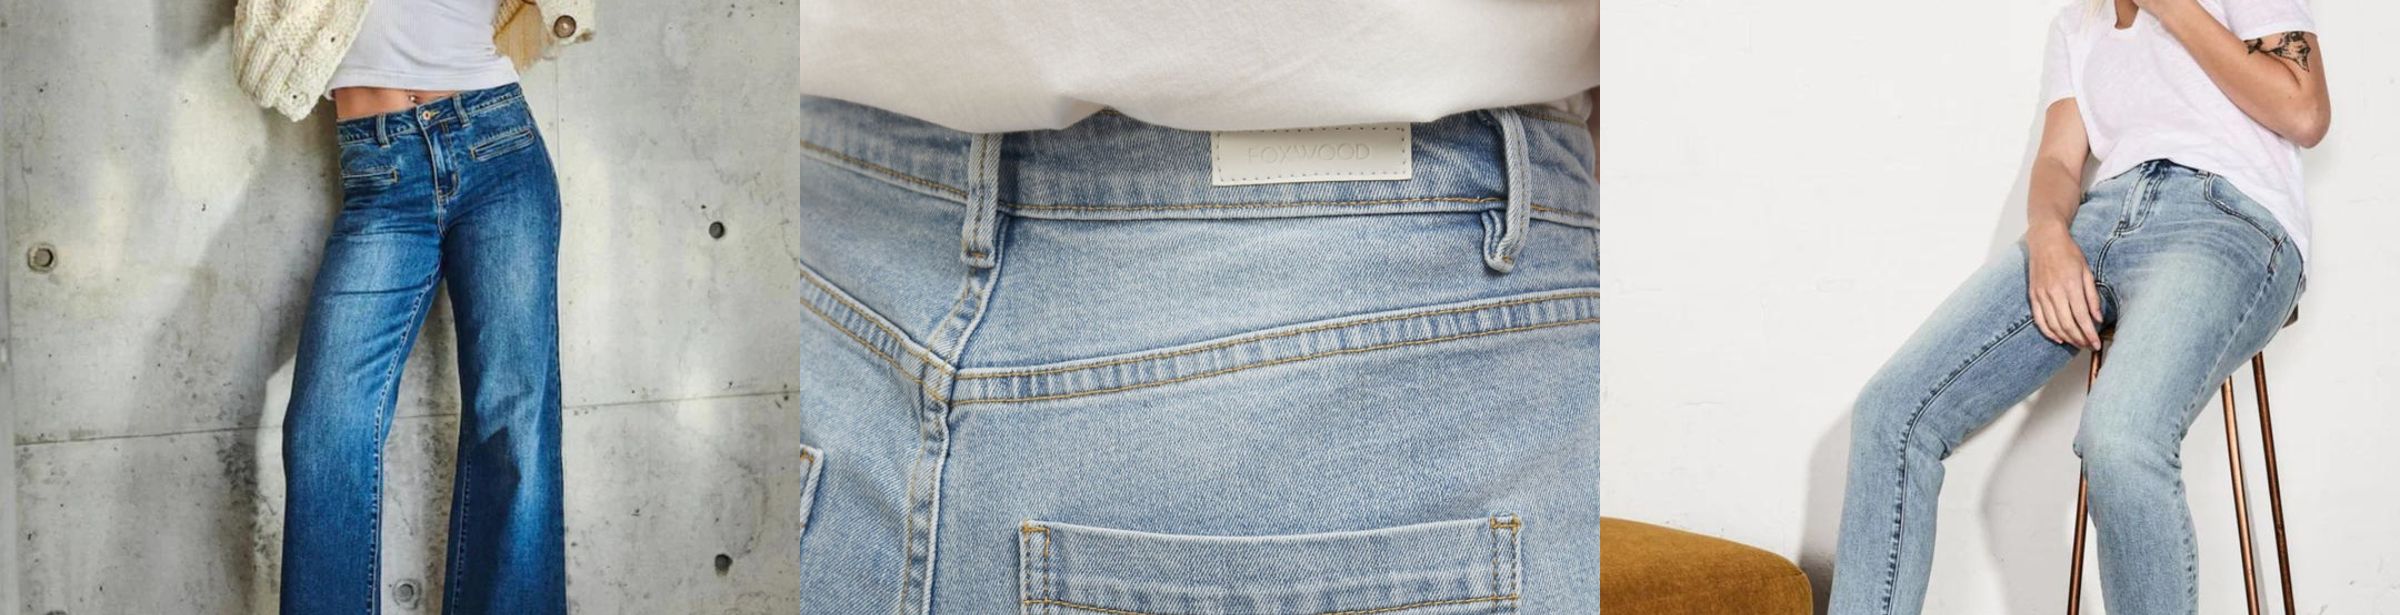 Buy SHAIRA FASHION Denim Jogger Jeans for Women Regular Waist